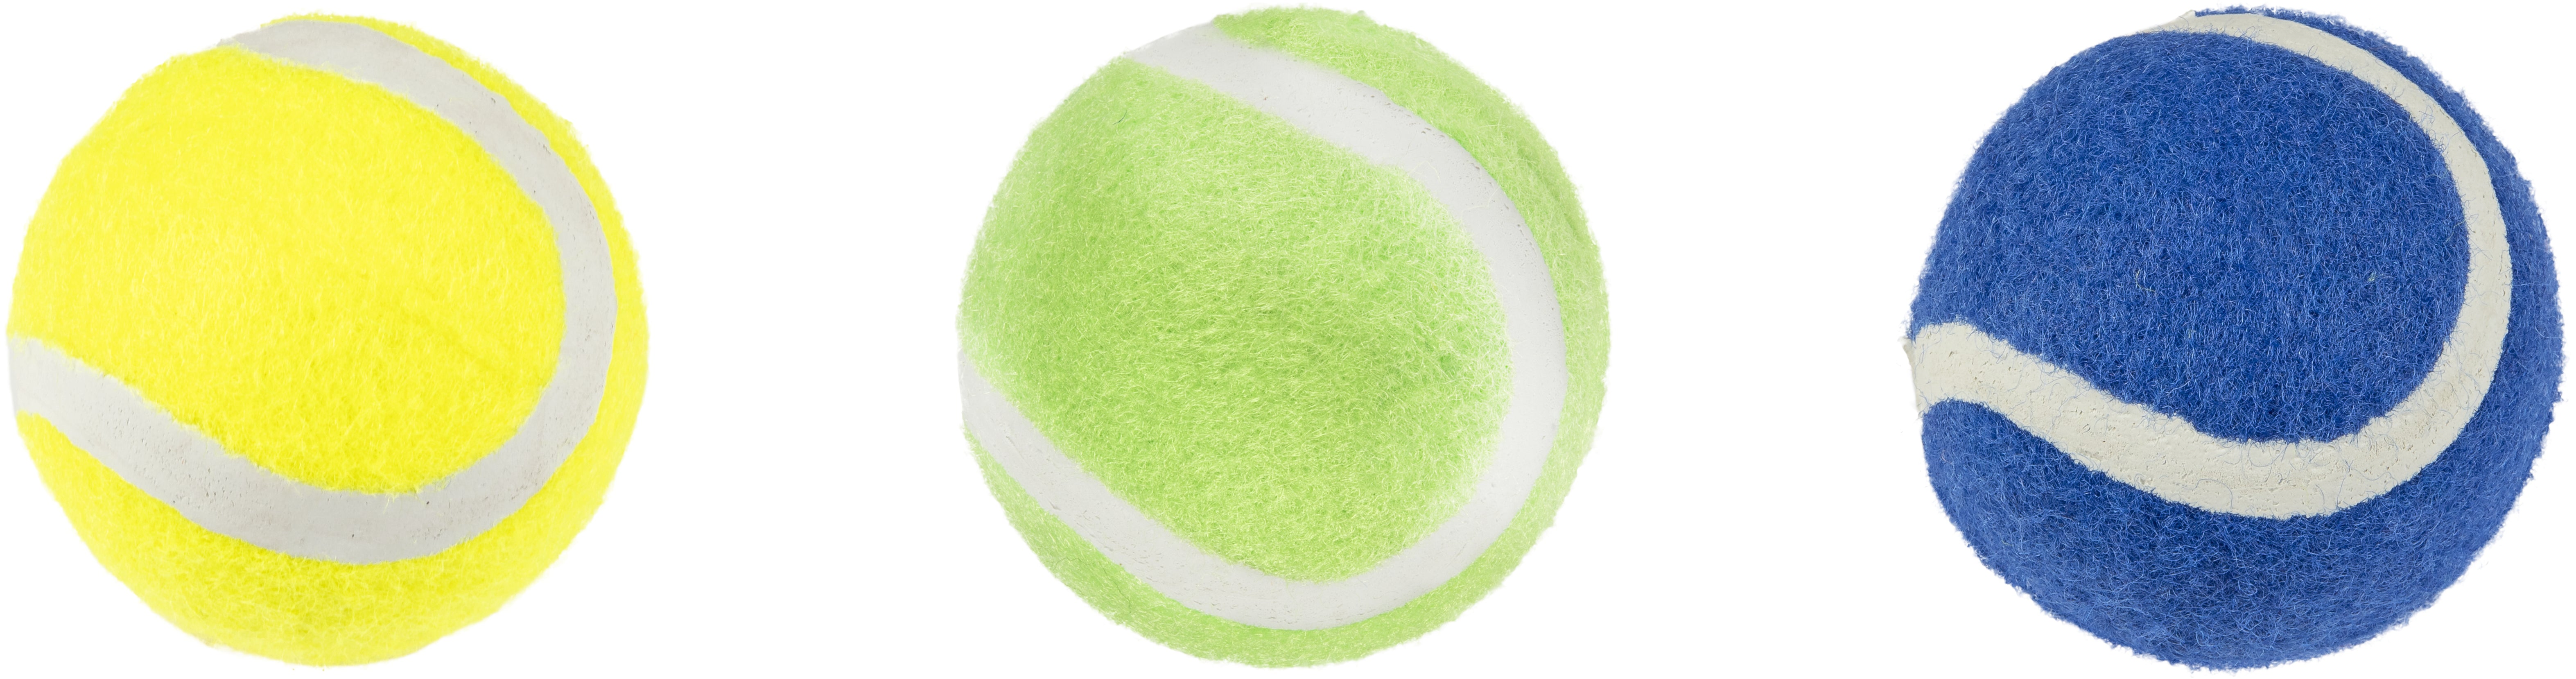 Hondenspeelgoed Tennisbal met Geluid - 3 stuks - Huisdierplezier